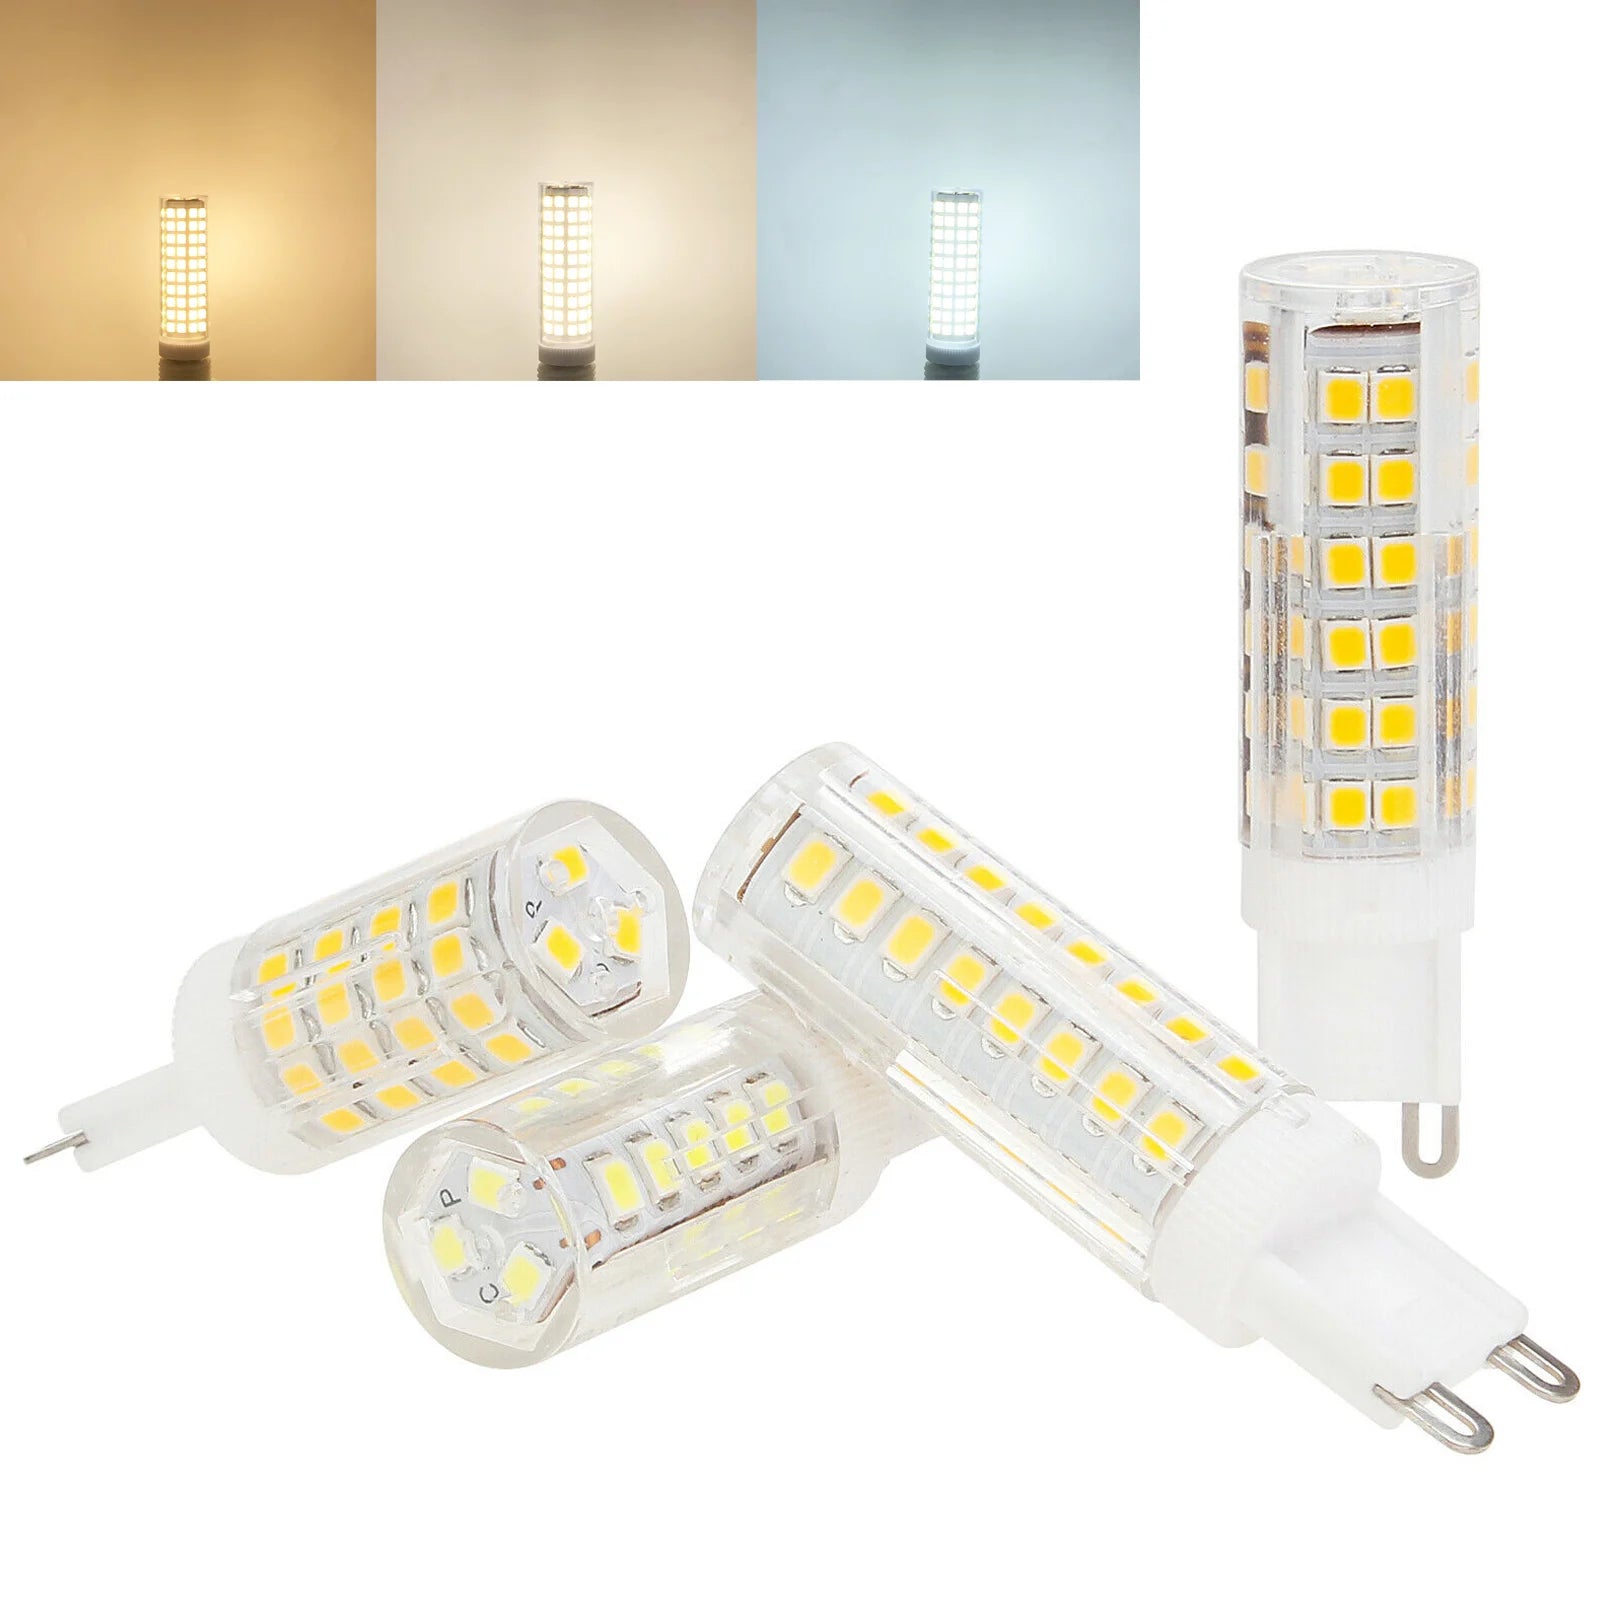 Mini G9 LED Bulbs Light Ceramic Lamp 220V 110V 7W 9W 12W 18W 20W 24W 2835 SMD Replace 100W Halogen Lamps Bright For Home Decor